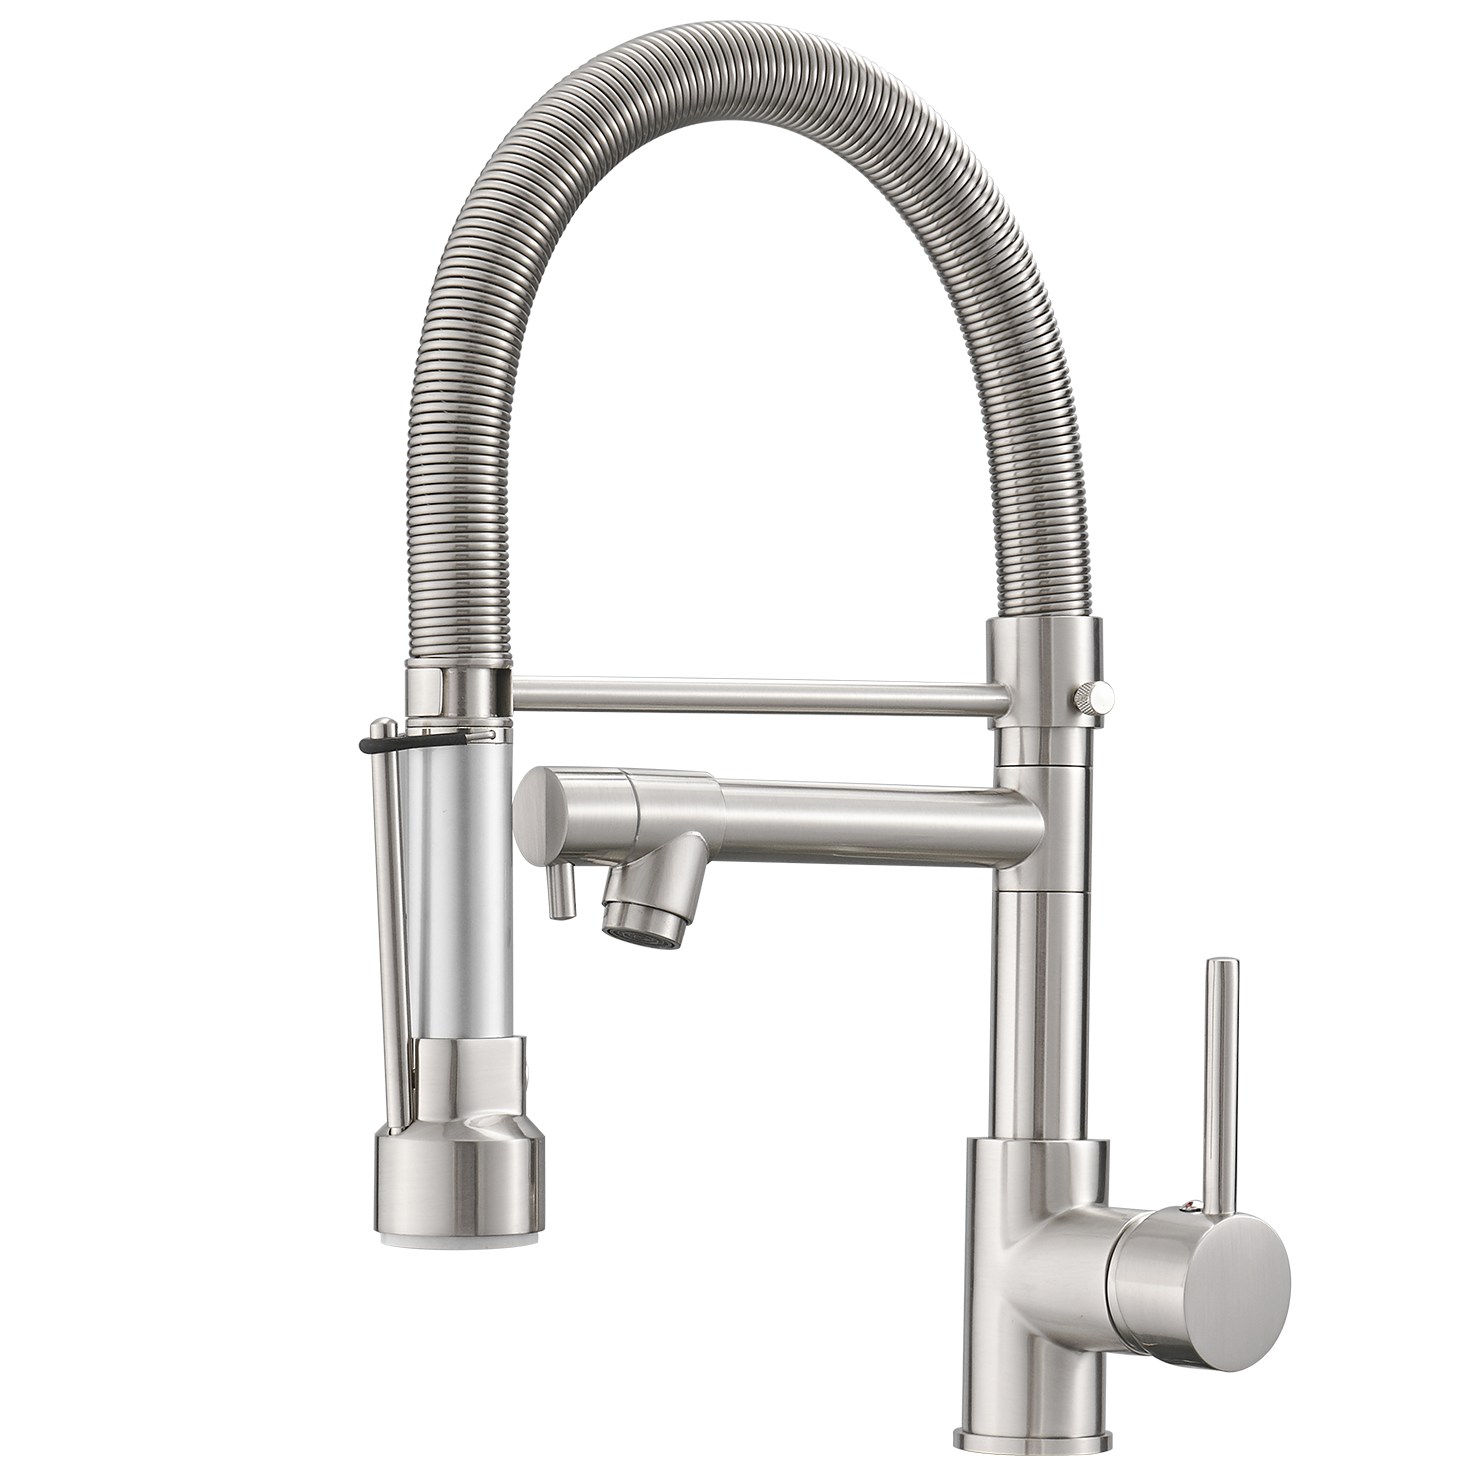 CASAINC Single-Handle No Sensor Pull-Down Sprayer Kitchen Faucet with Pot Filler in Brushed Nickel-CASAINC